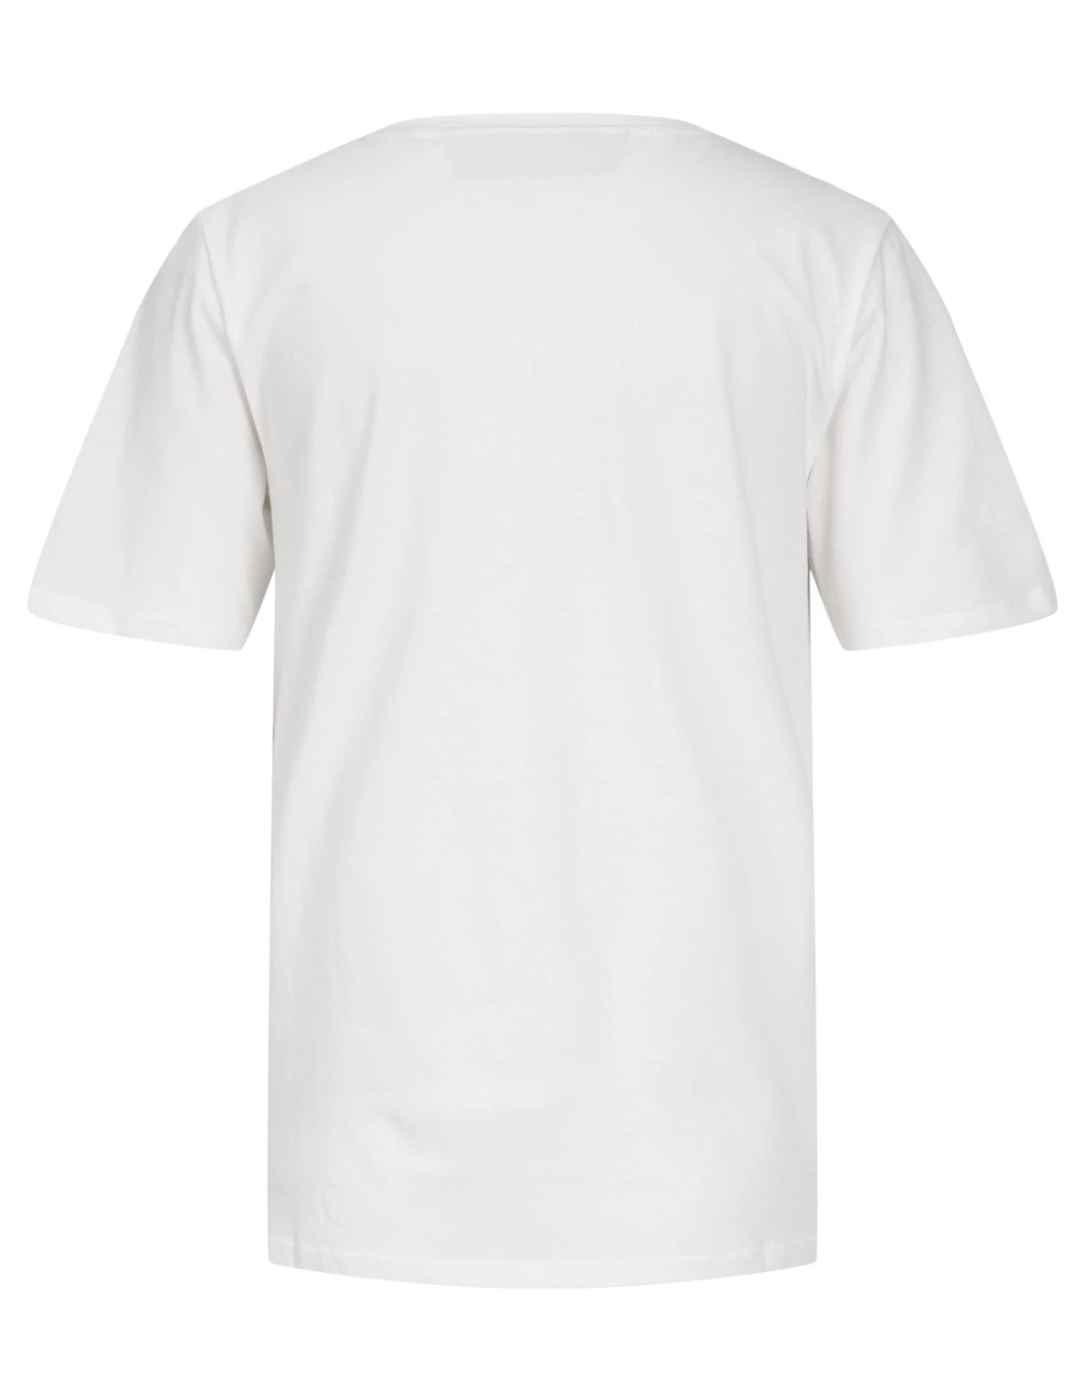 Camiseta JJXX Titia blanco manga corta para mujer